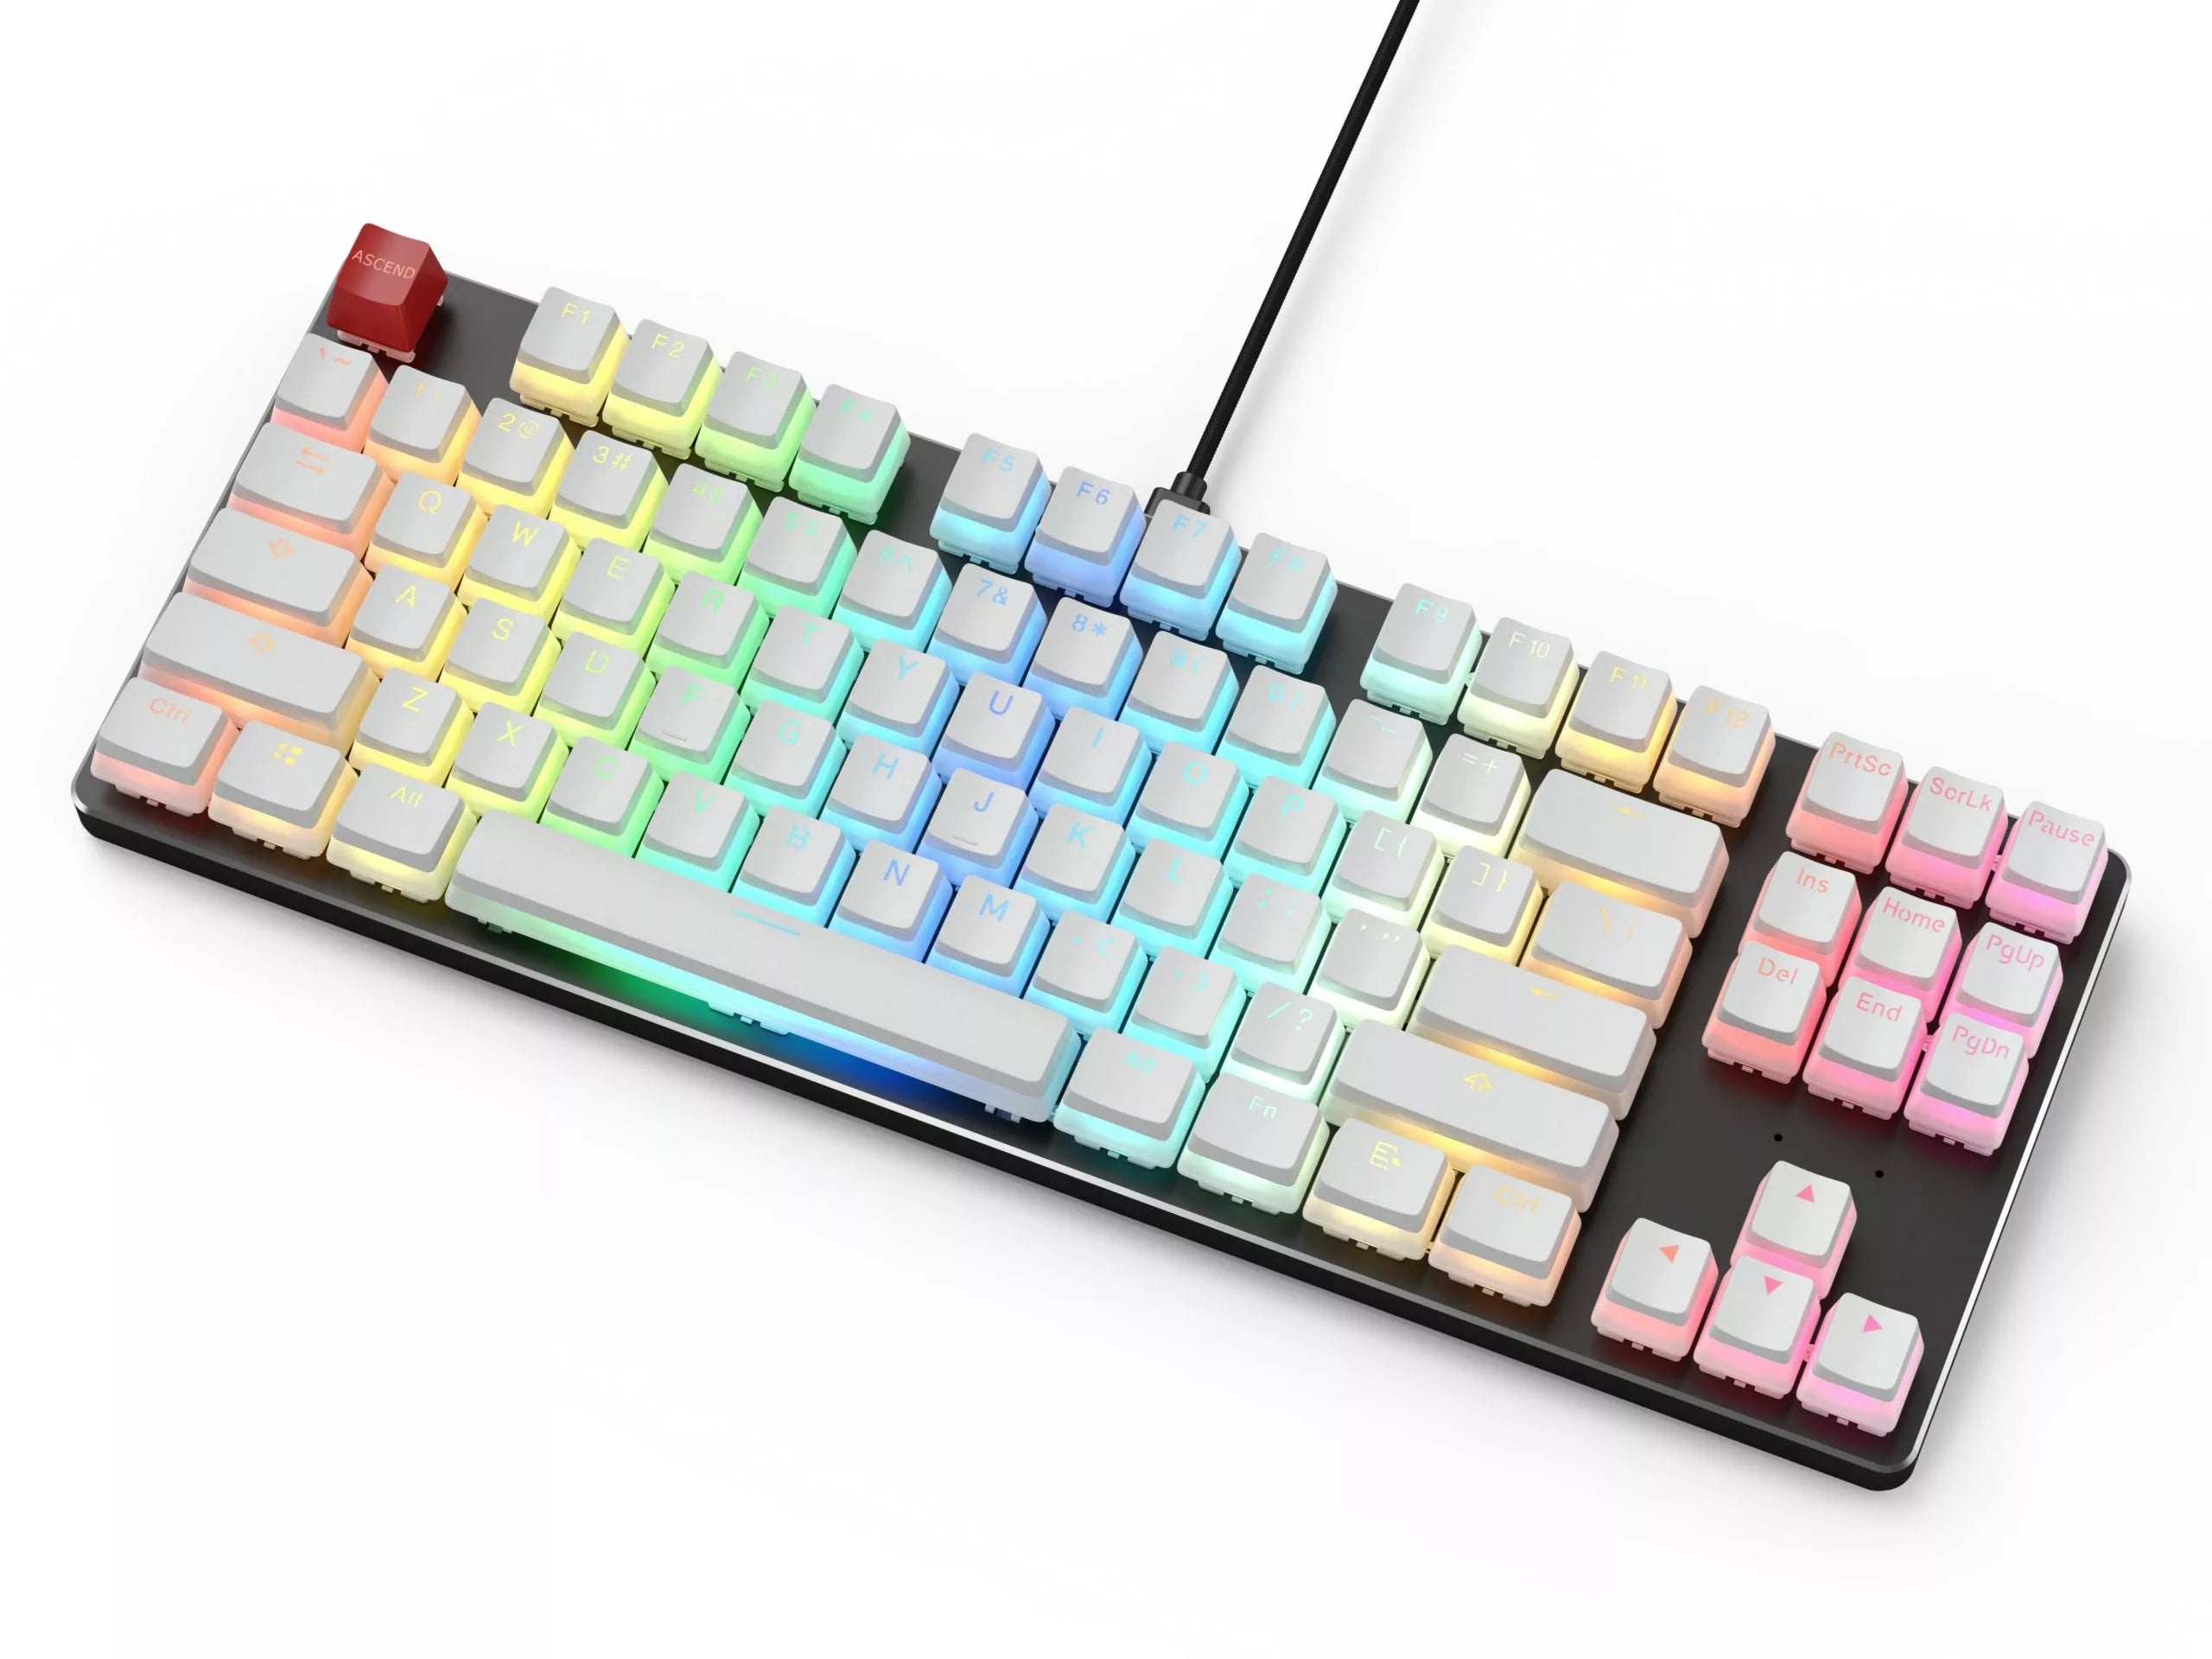 Glorious 104-Key ABS Doubleshot Mechanical Keyboard Keycaps - Aura